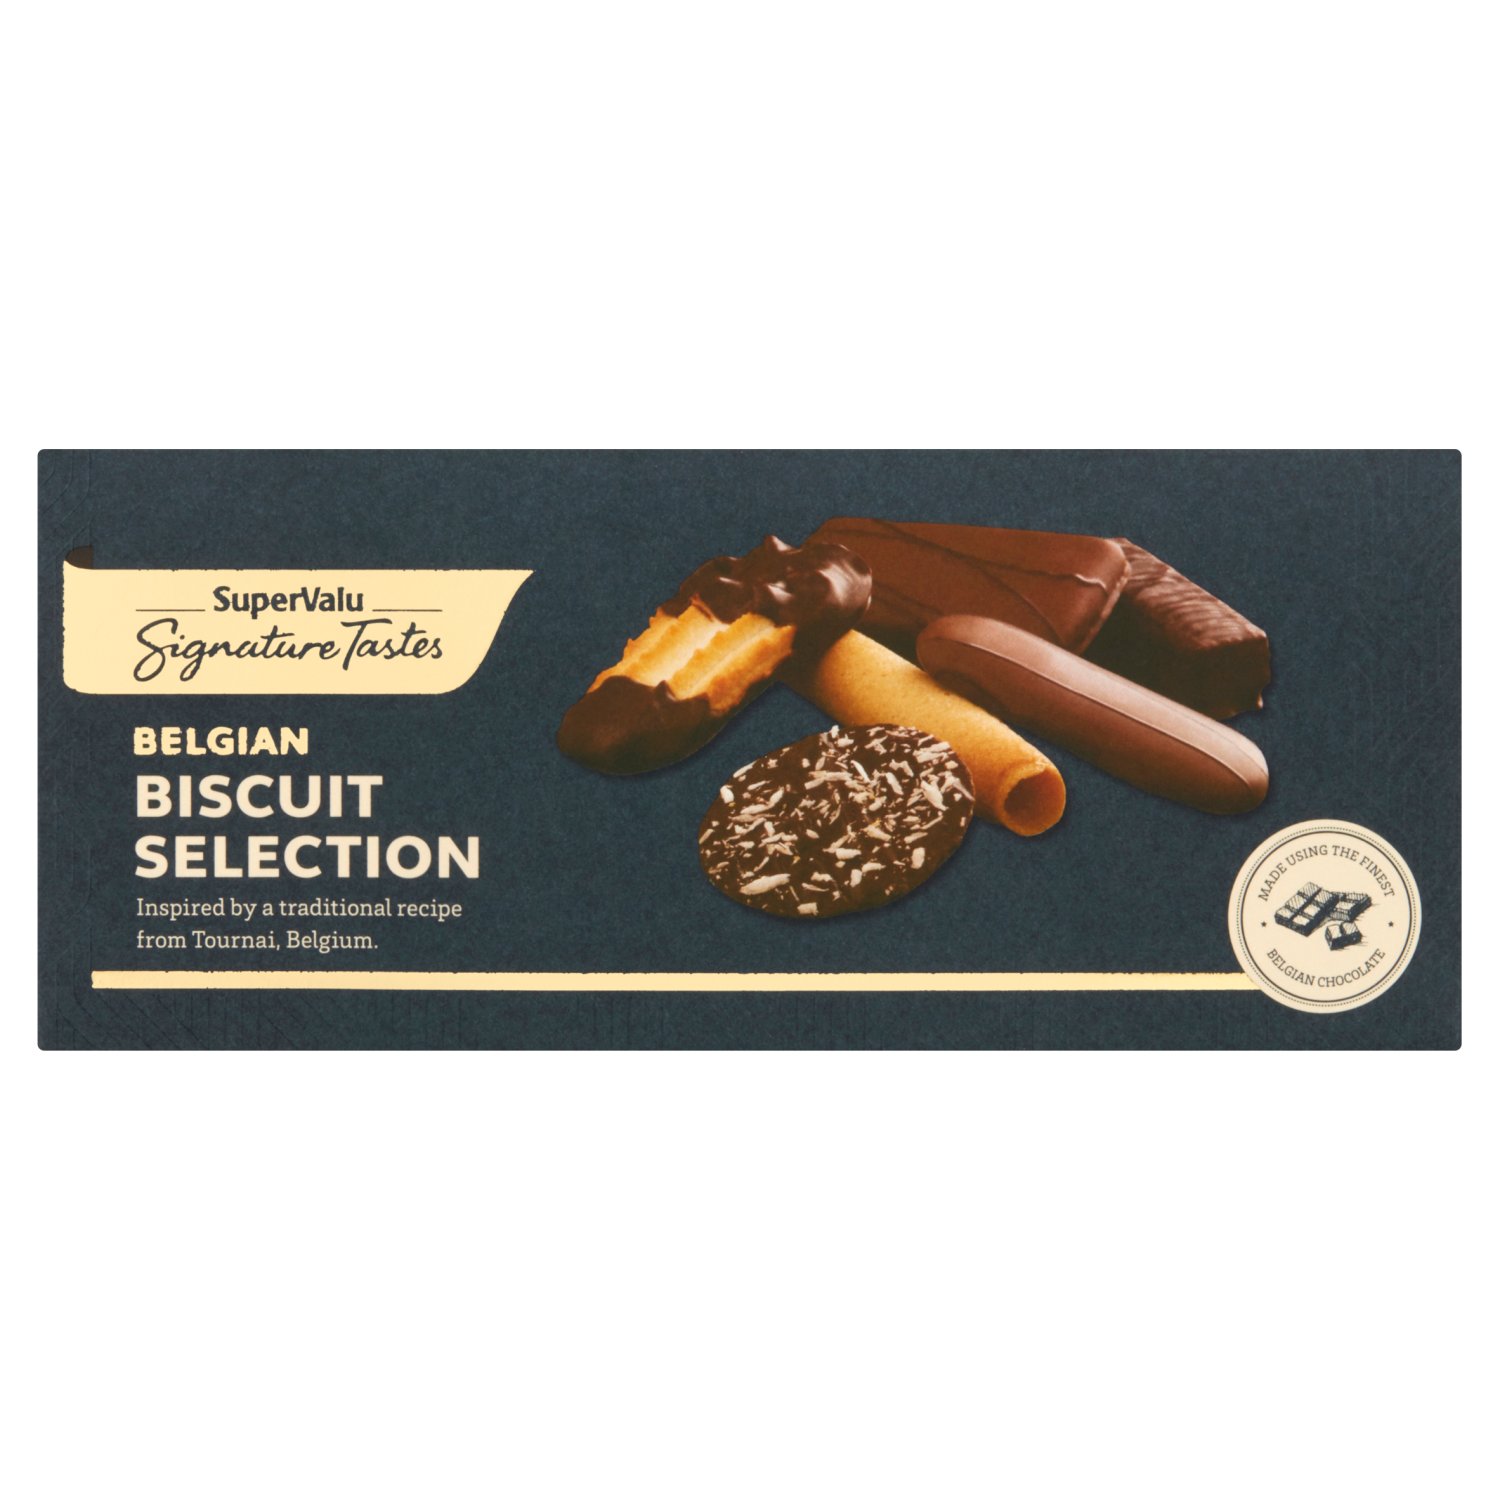 Signature Tastes Belgian Biscuit Selection (200 g)